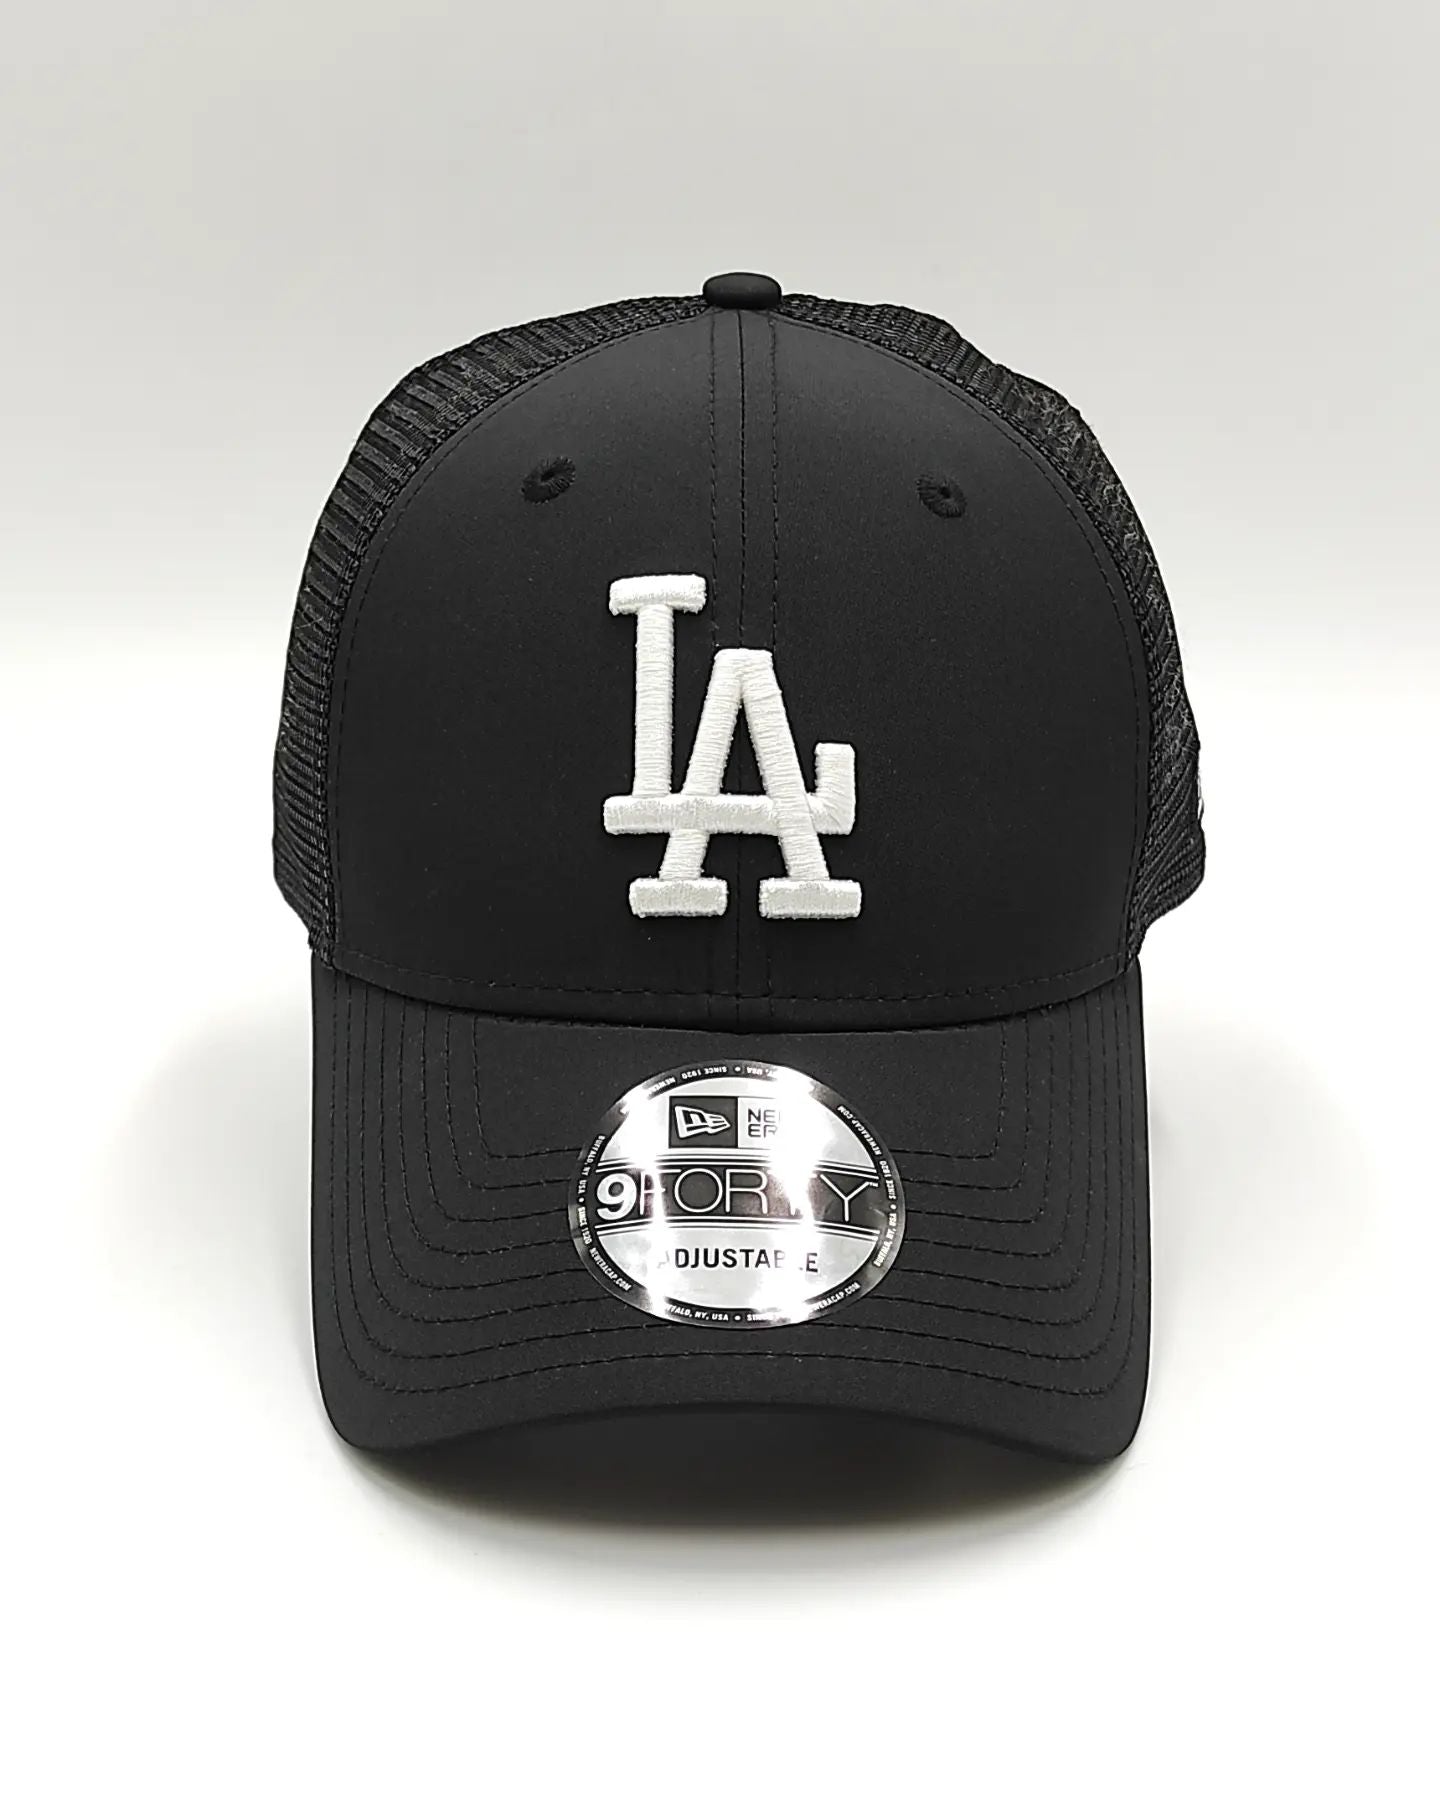 New Era Los Angeles Dodgers trucker black